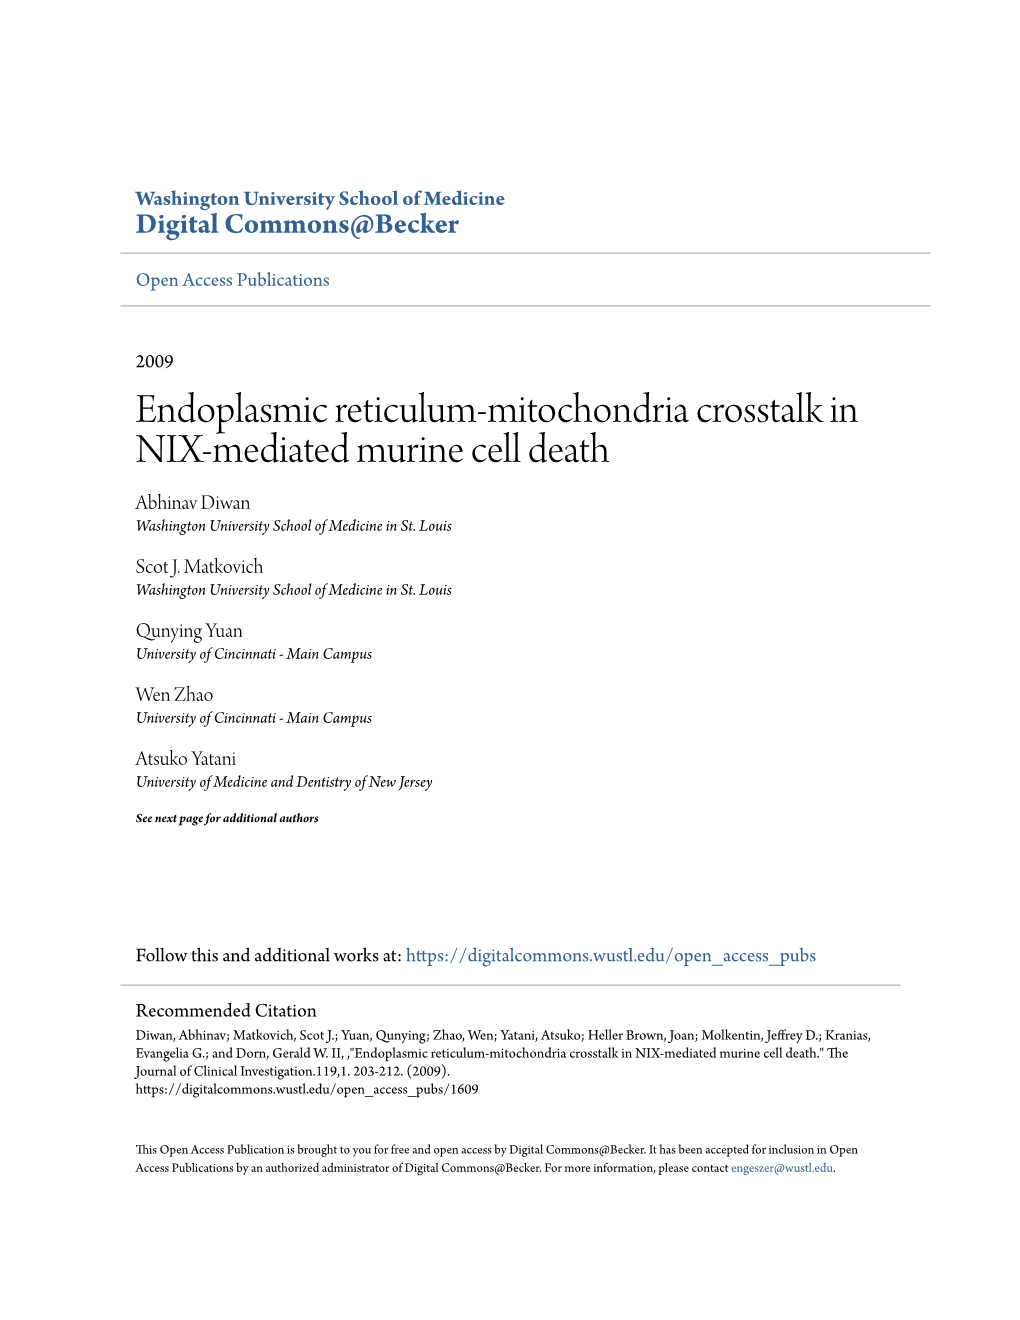 Endoplasmic Reticulum-Mitochondria Crosstalk in NIX-Mediated Murine Cell Death Abhinav Diwan Washington University School of Medicine in St